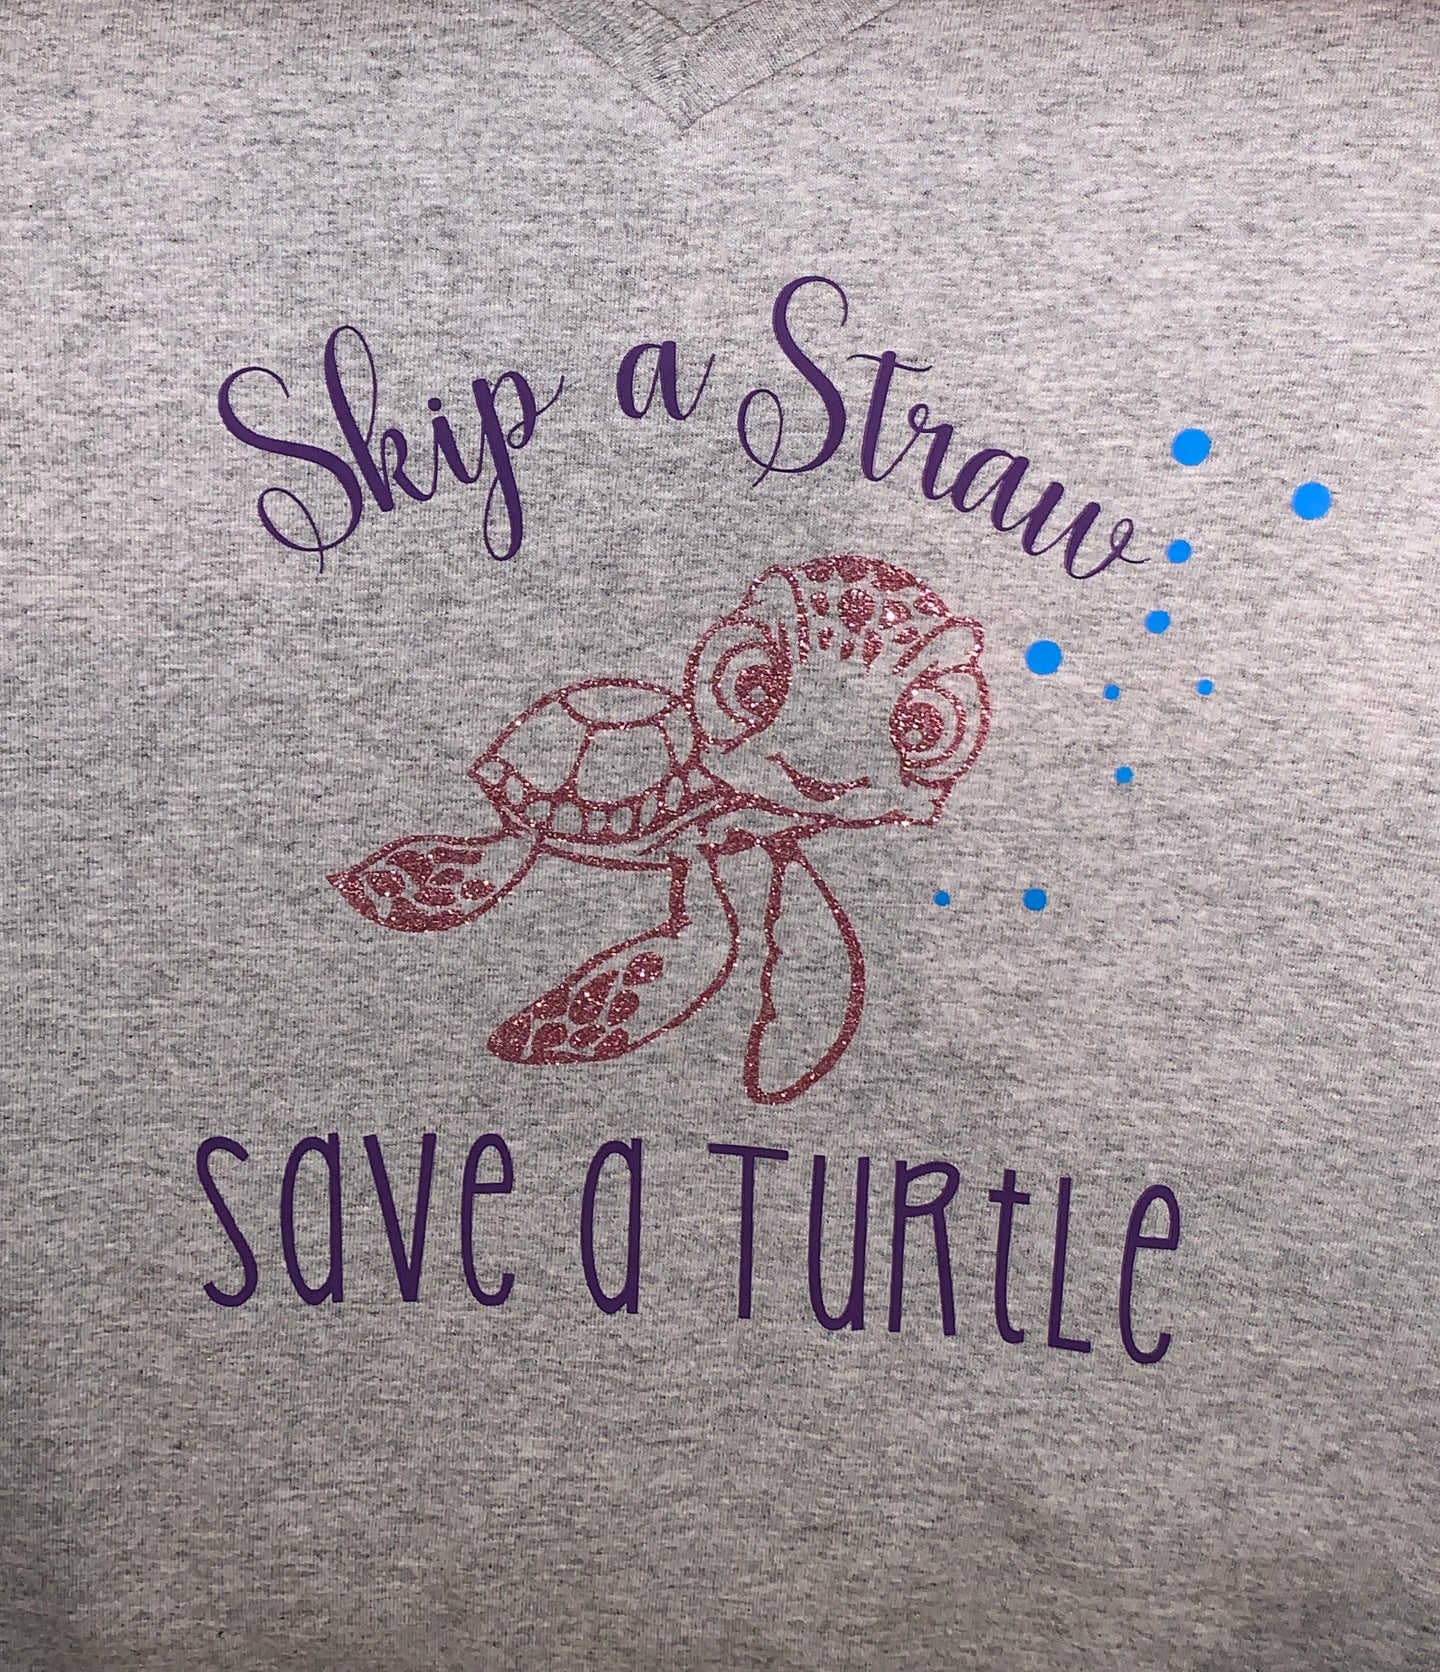 Skip a Straw, Save a Turtle T-Shirt